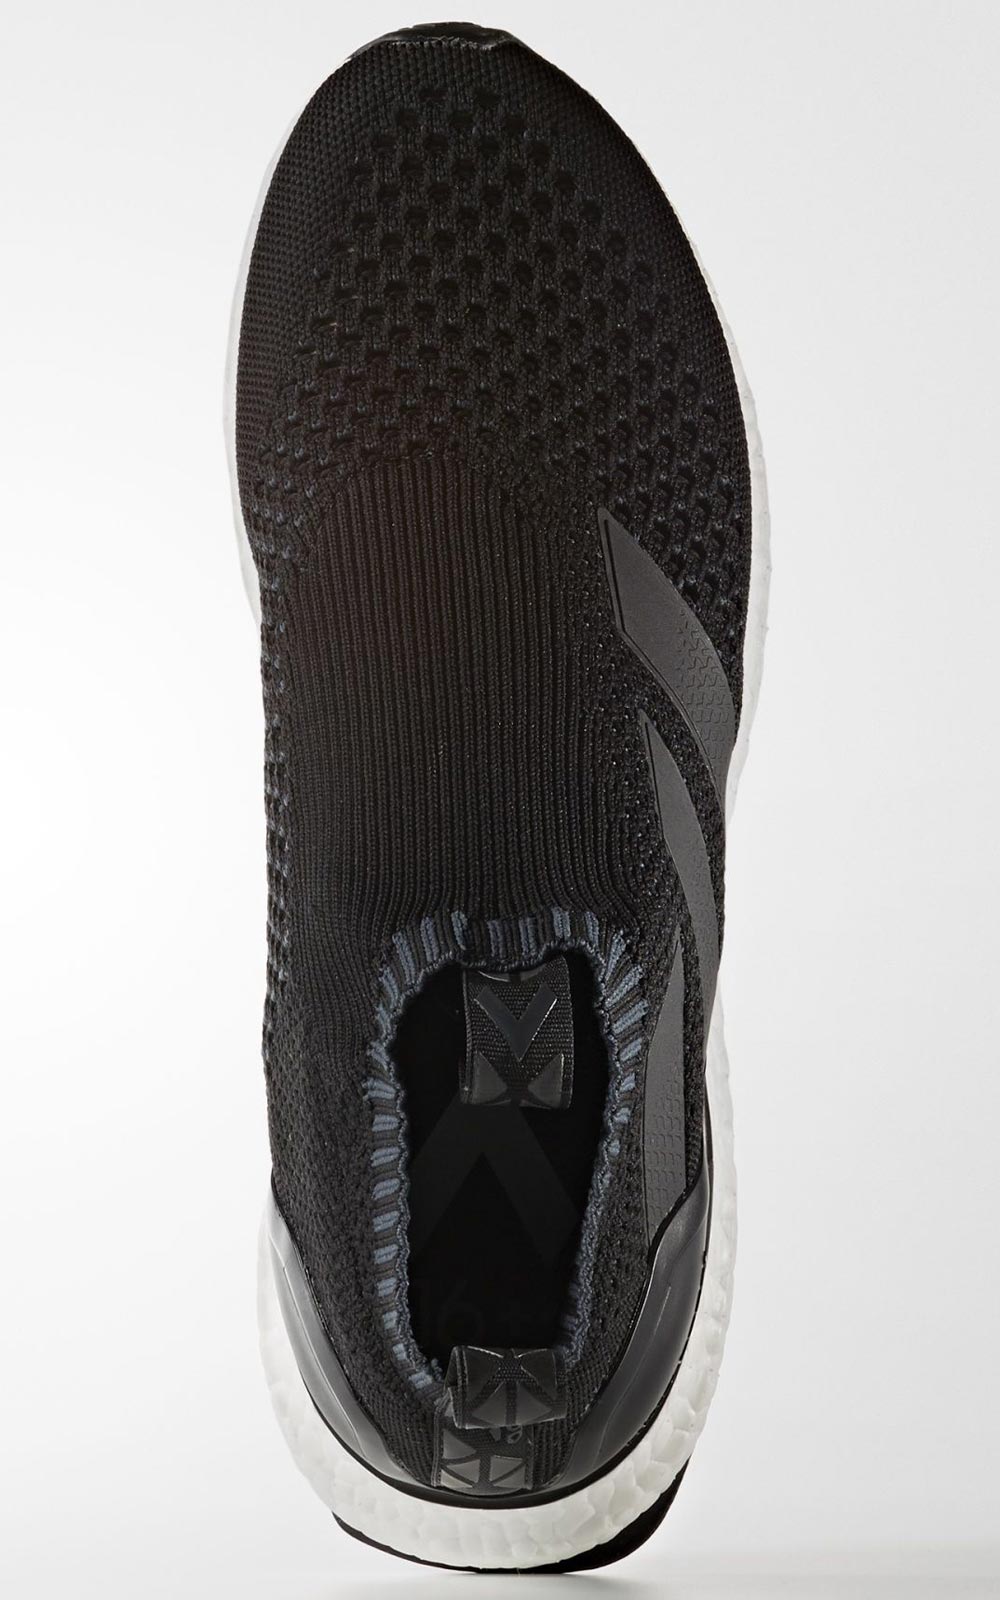 Black Adidas Ace 16+ PureControl UltraBoost Released - Footy Headlines